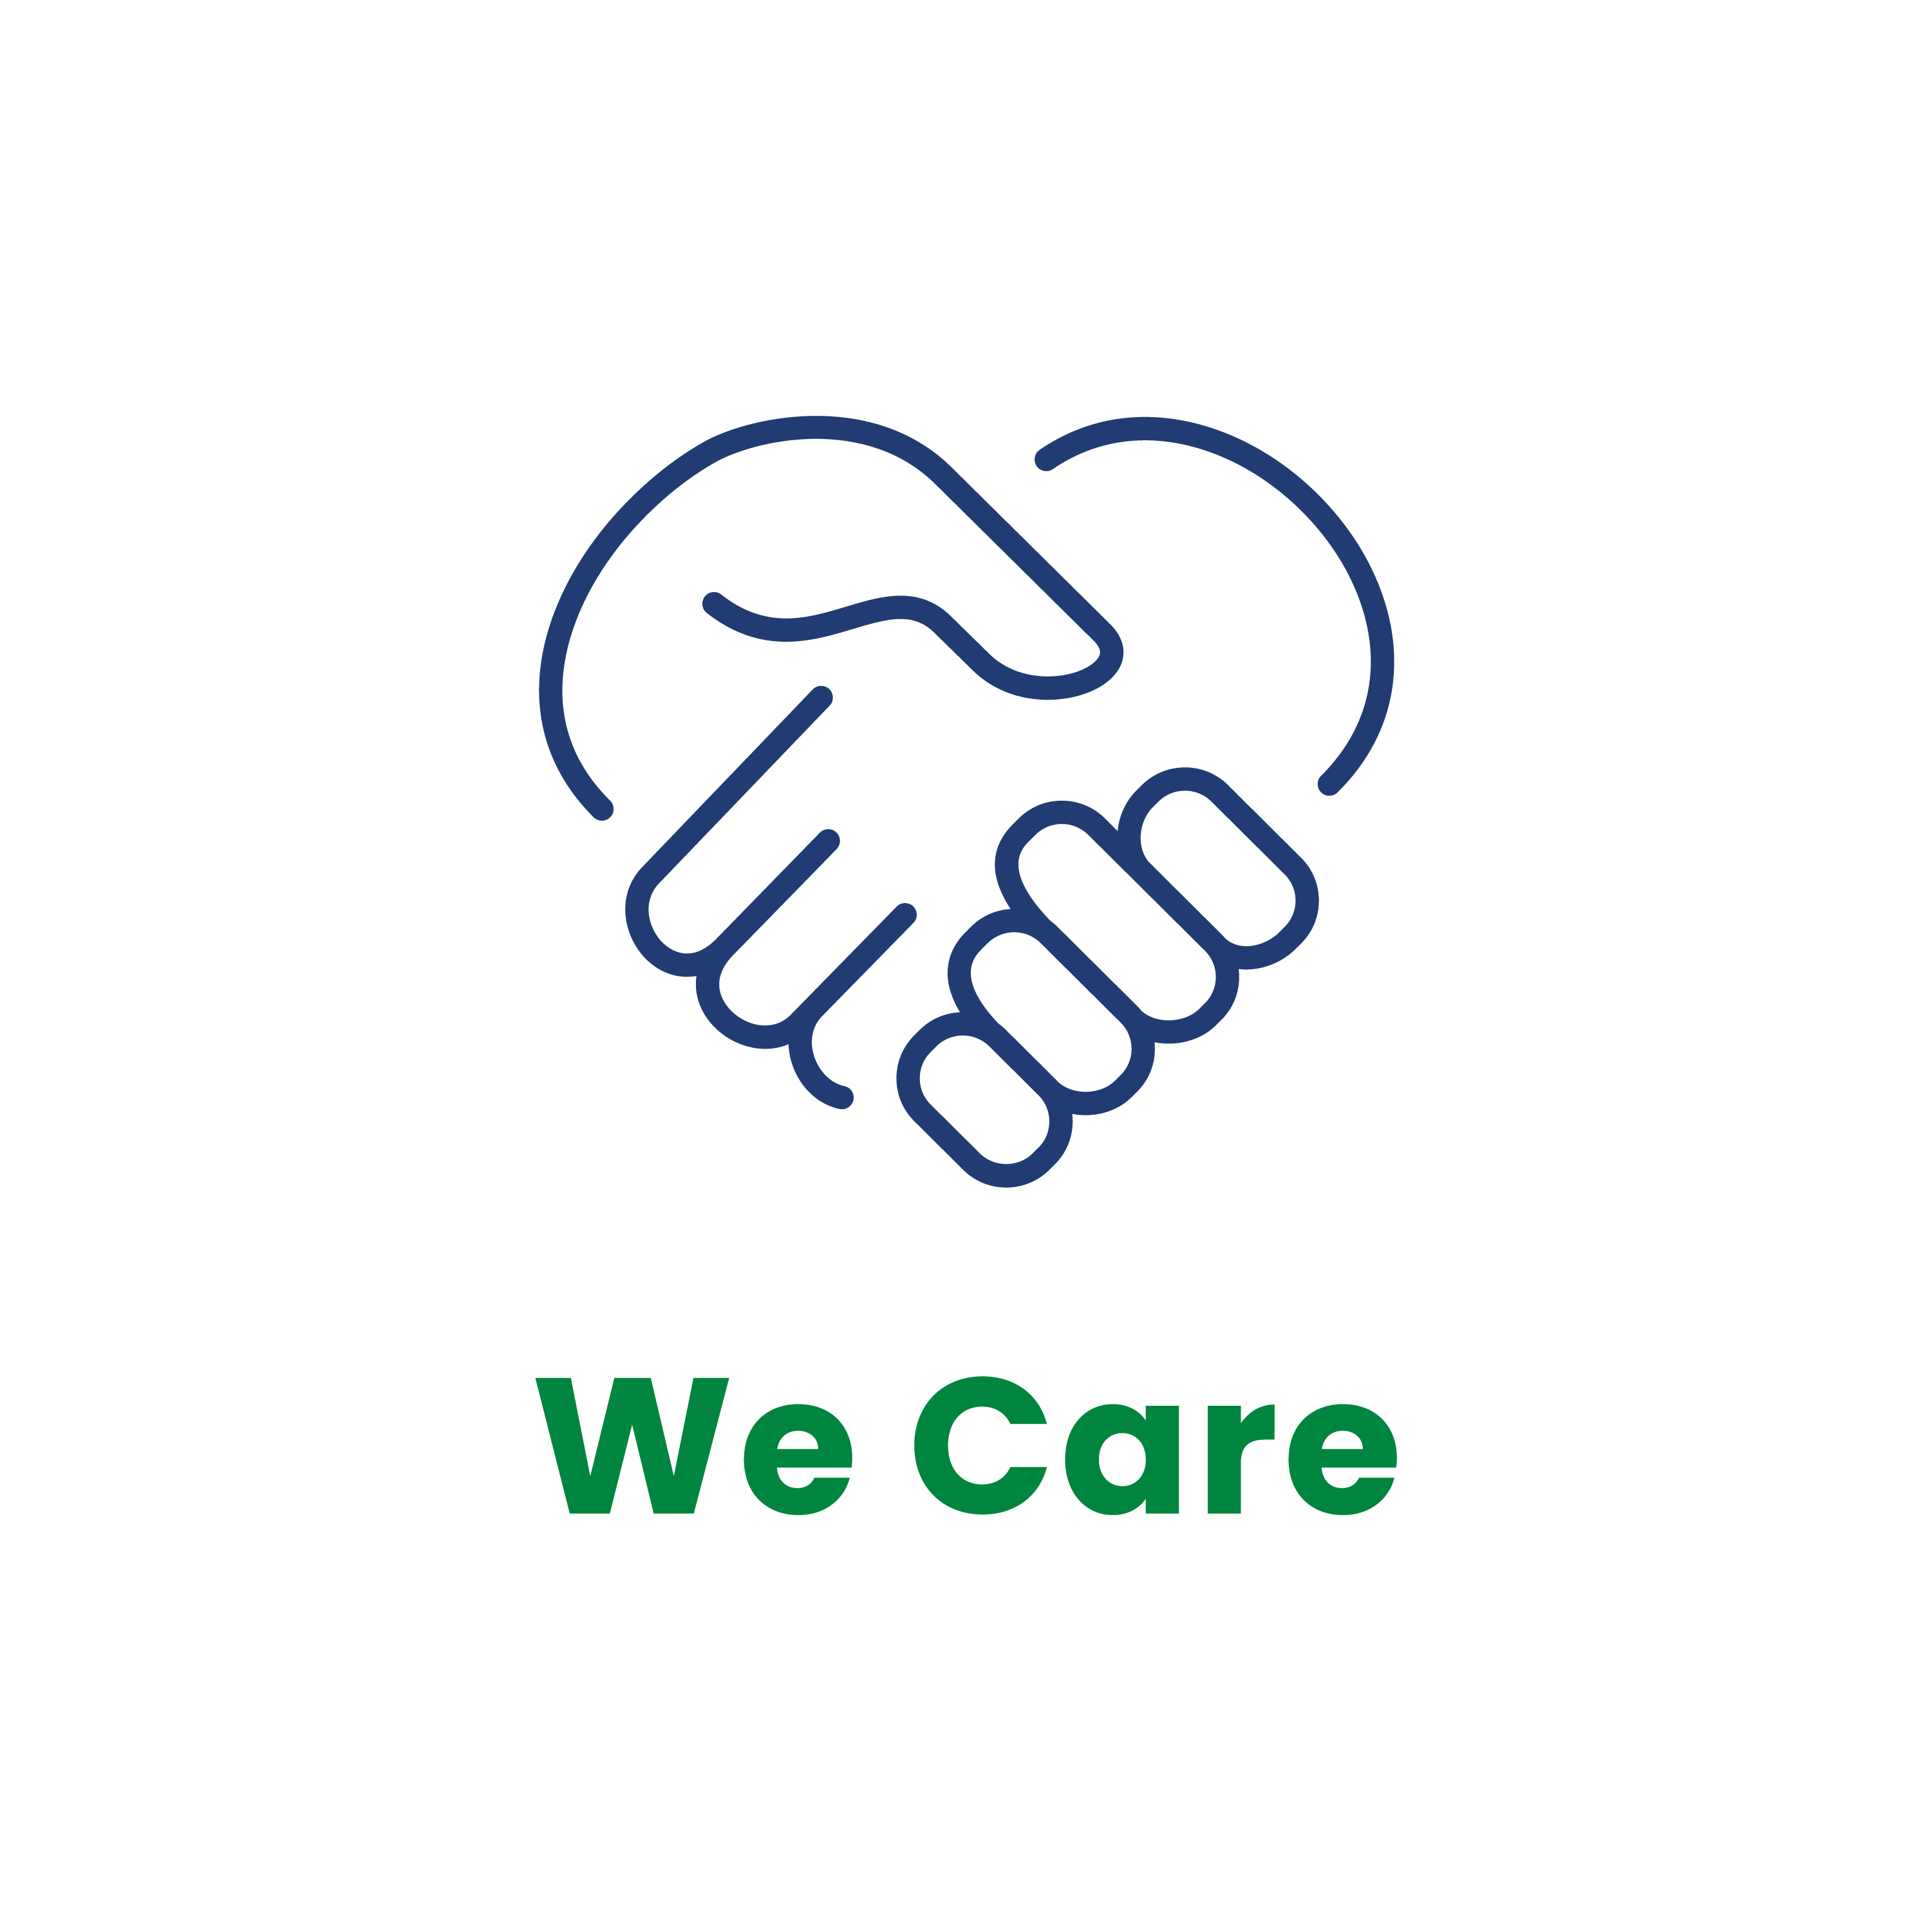 Values Logo - We Care